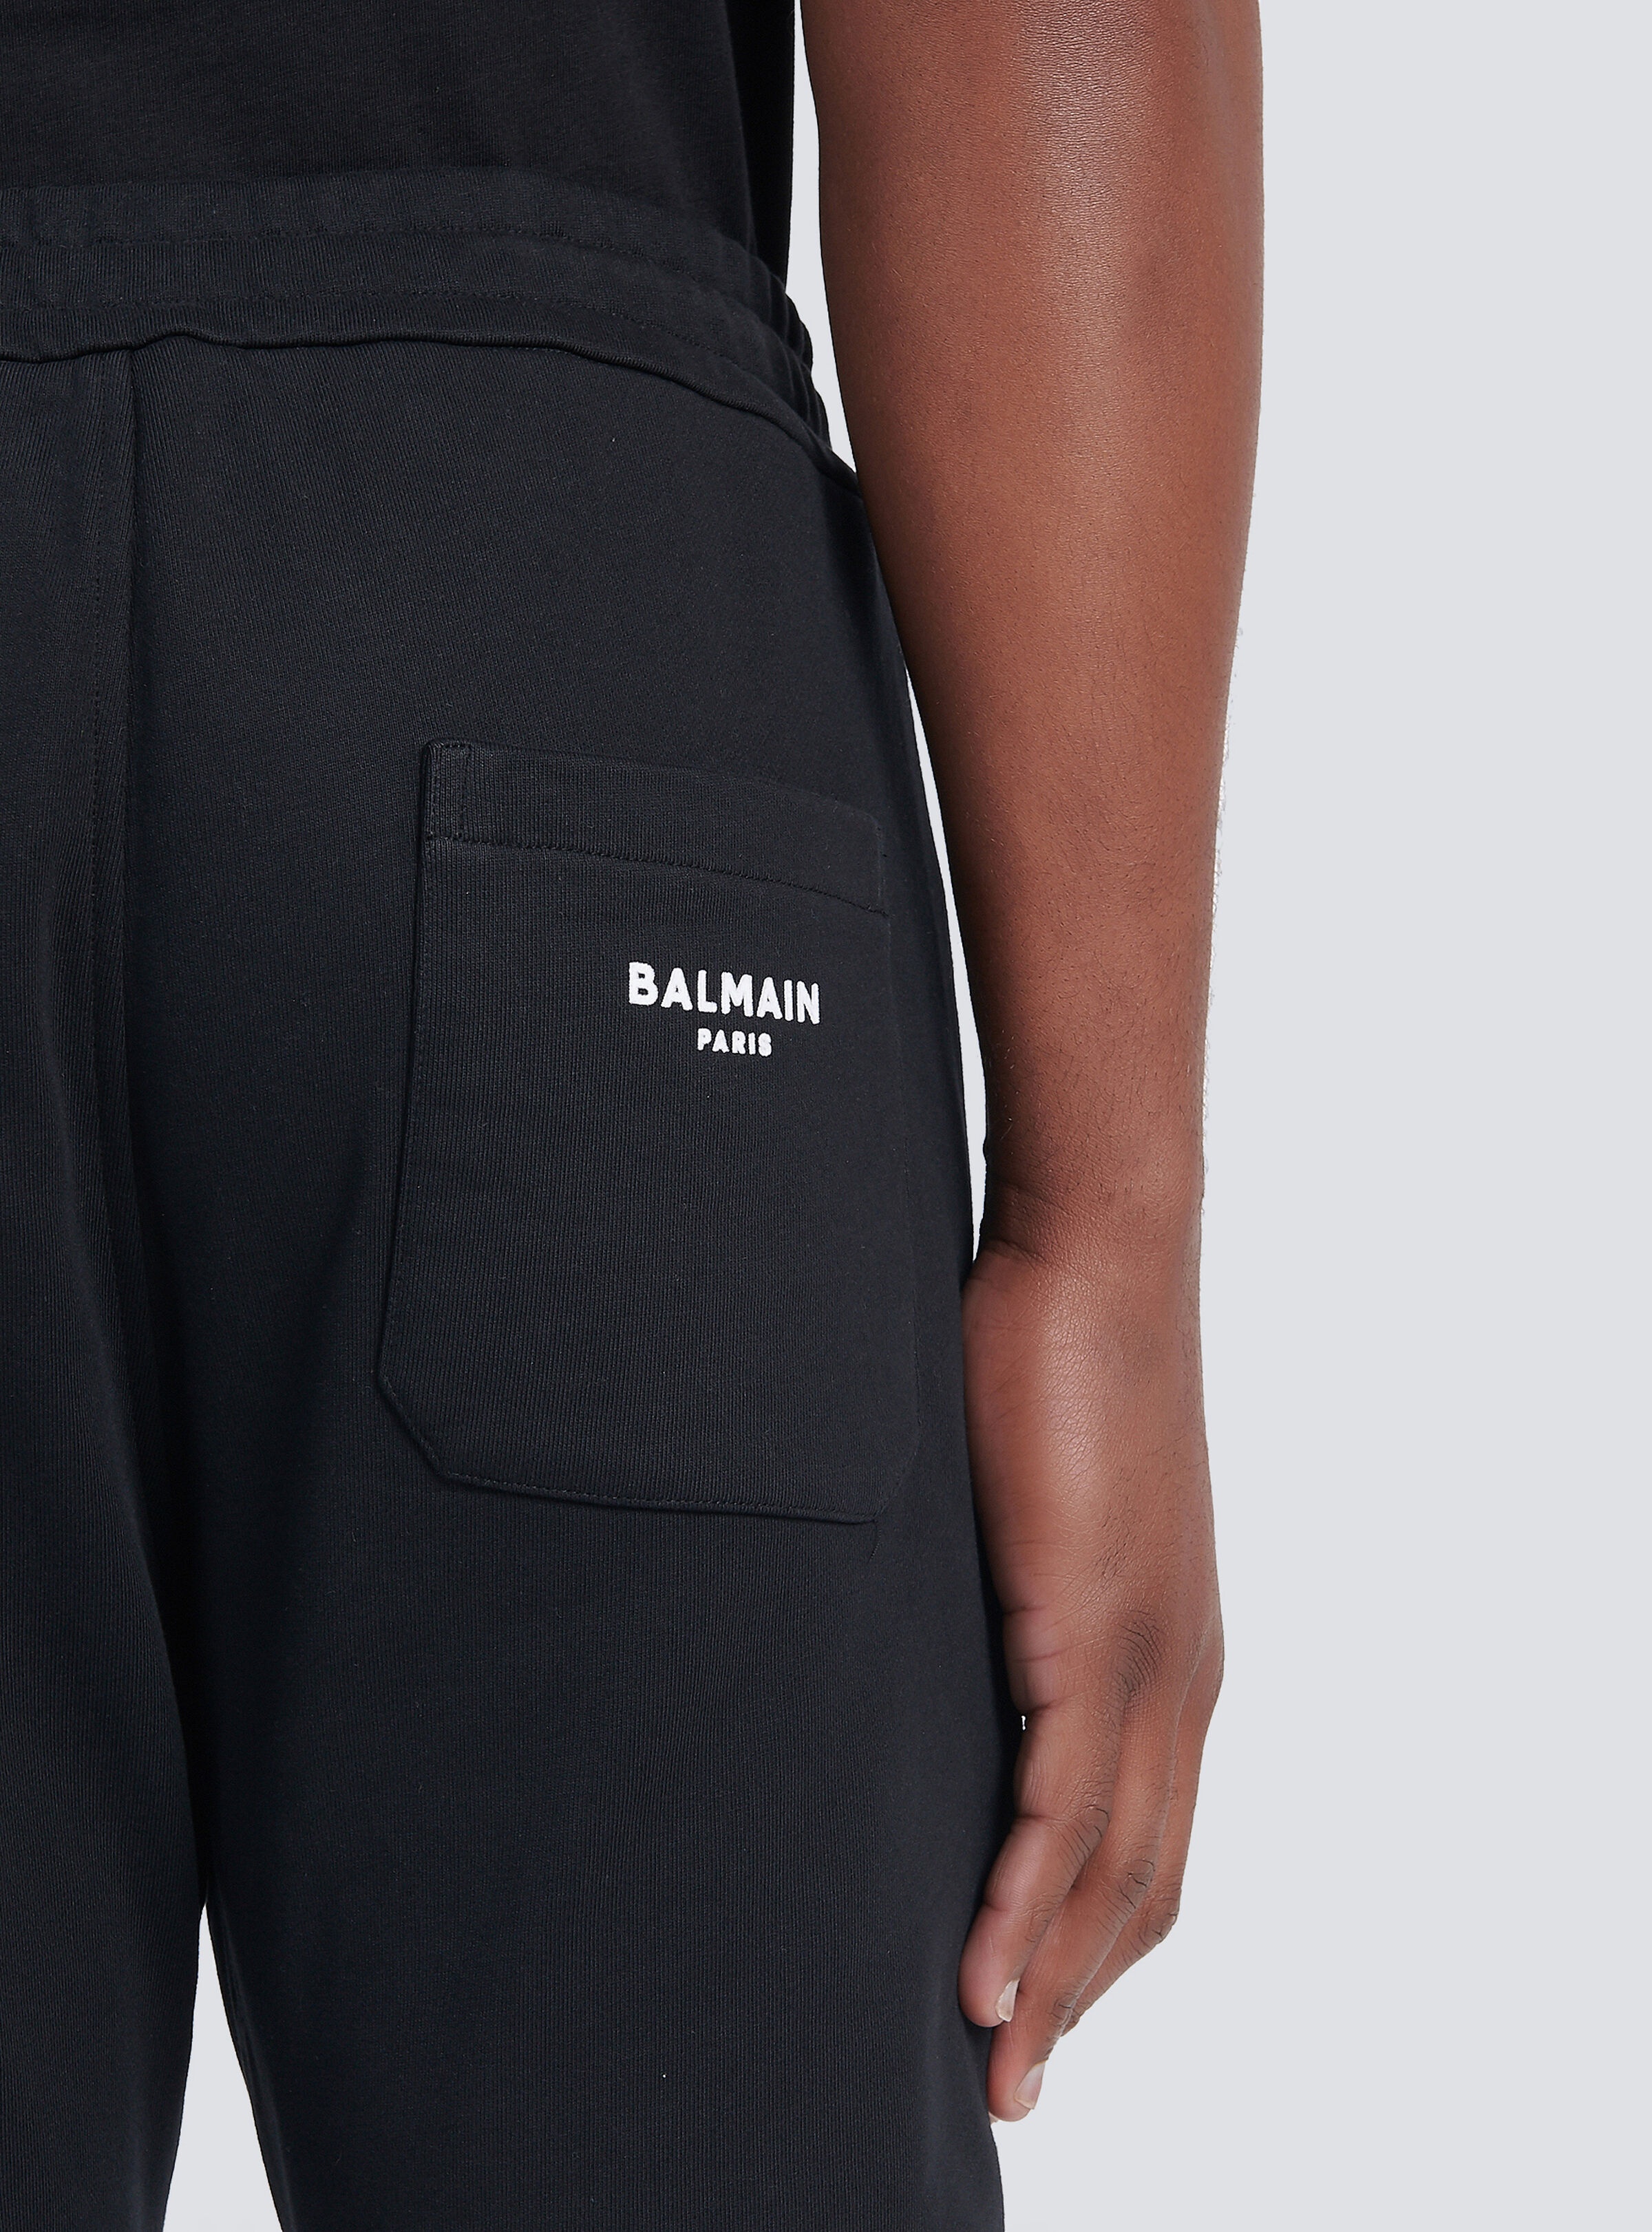 Cotton sweatpants with Balmain Paris logo - 7